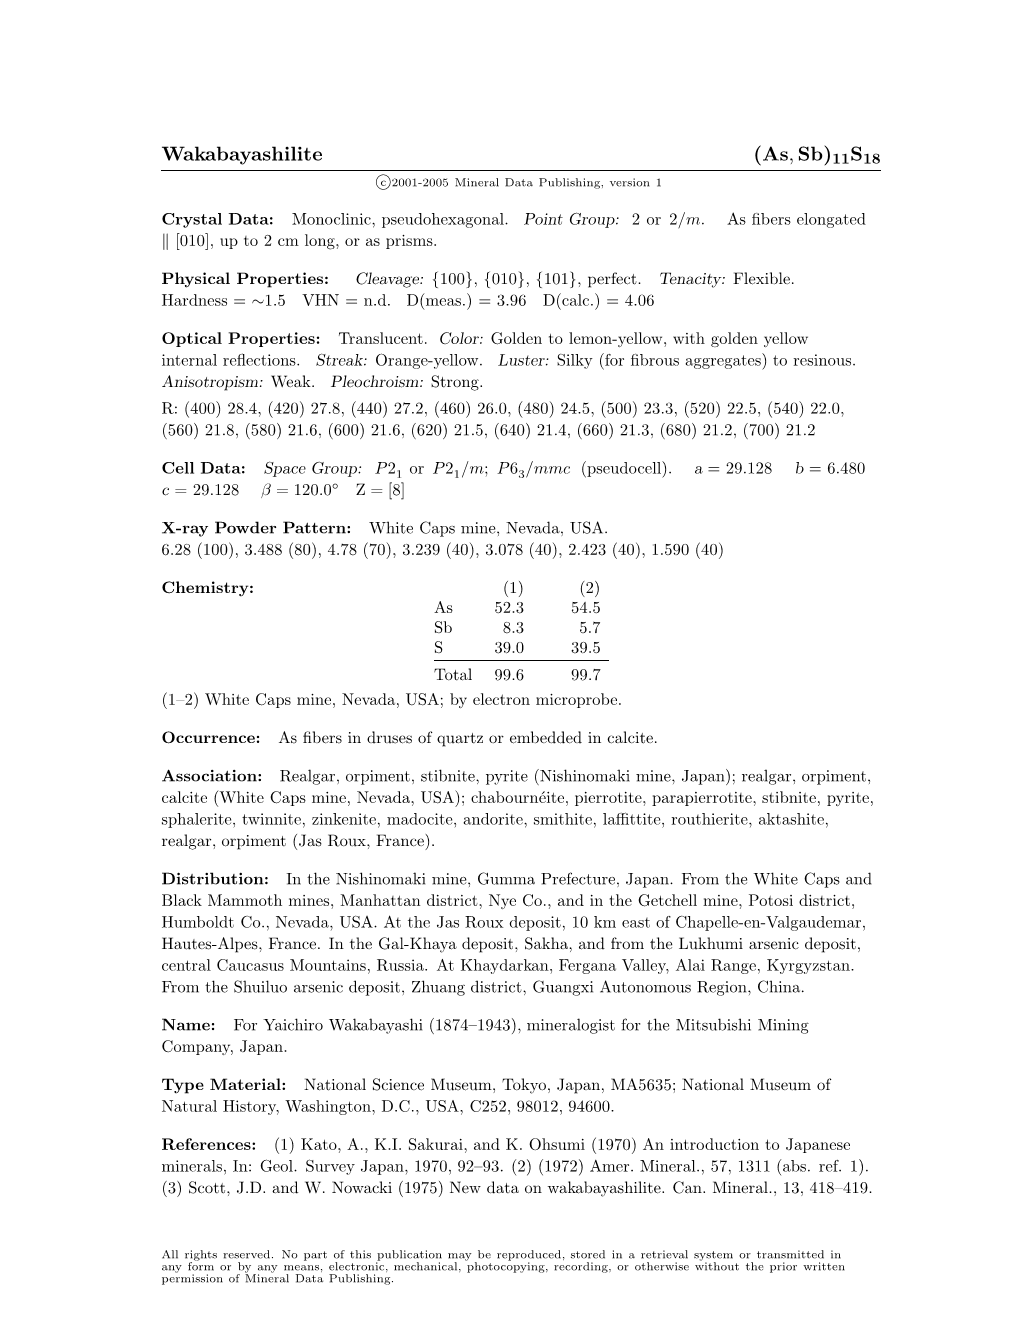 Wakabayashilite (As, Sb)11S18 C 2001-2005 Mineral Data Publishing, Version 1